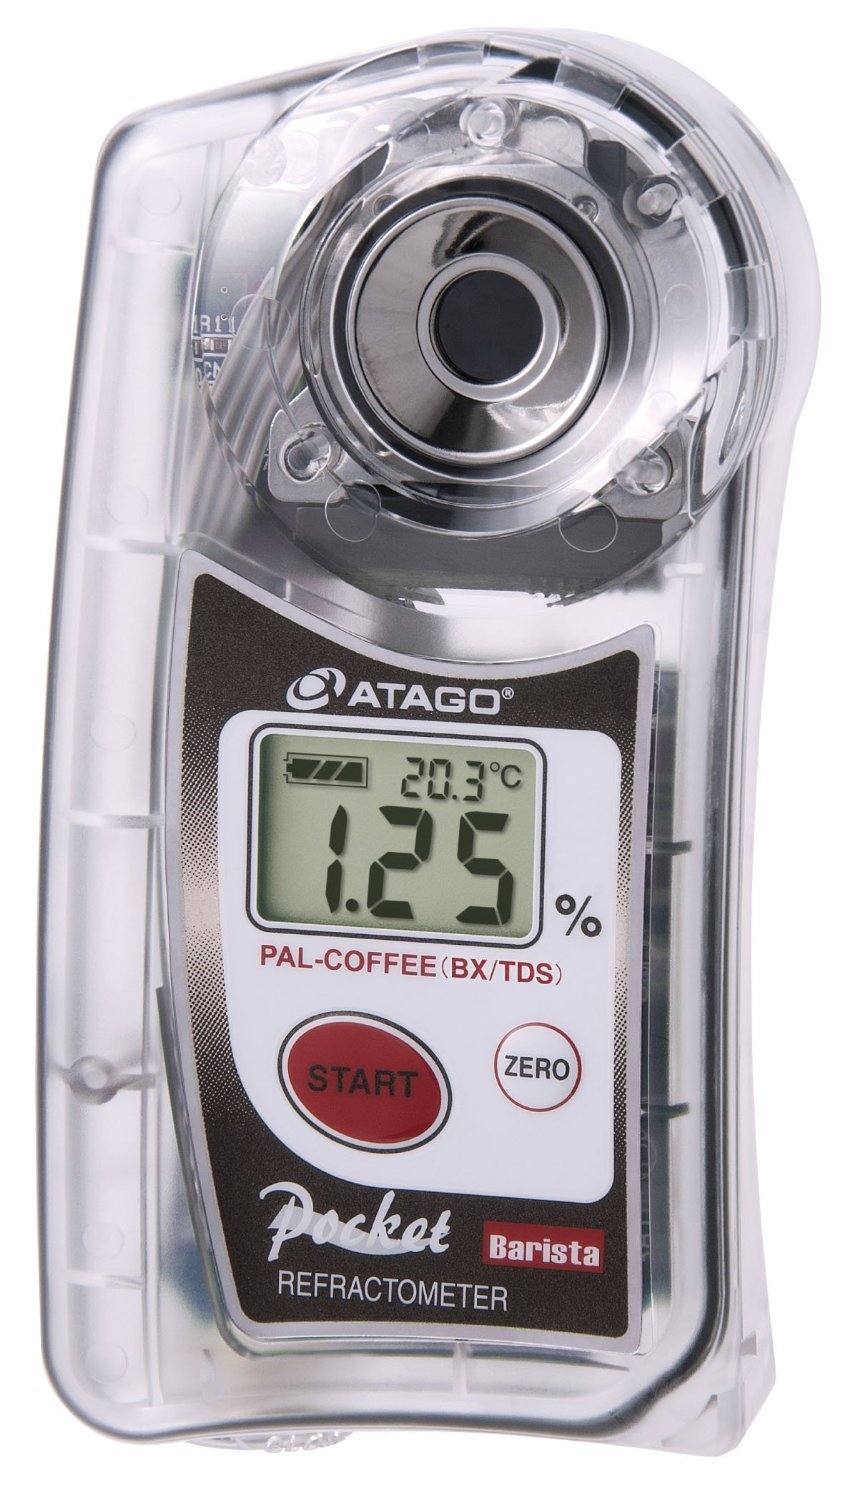 PAl Coffe refraktometer for Barrista